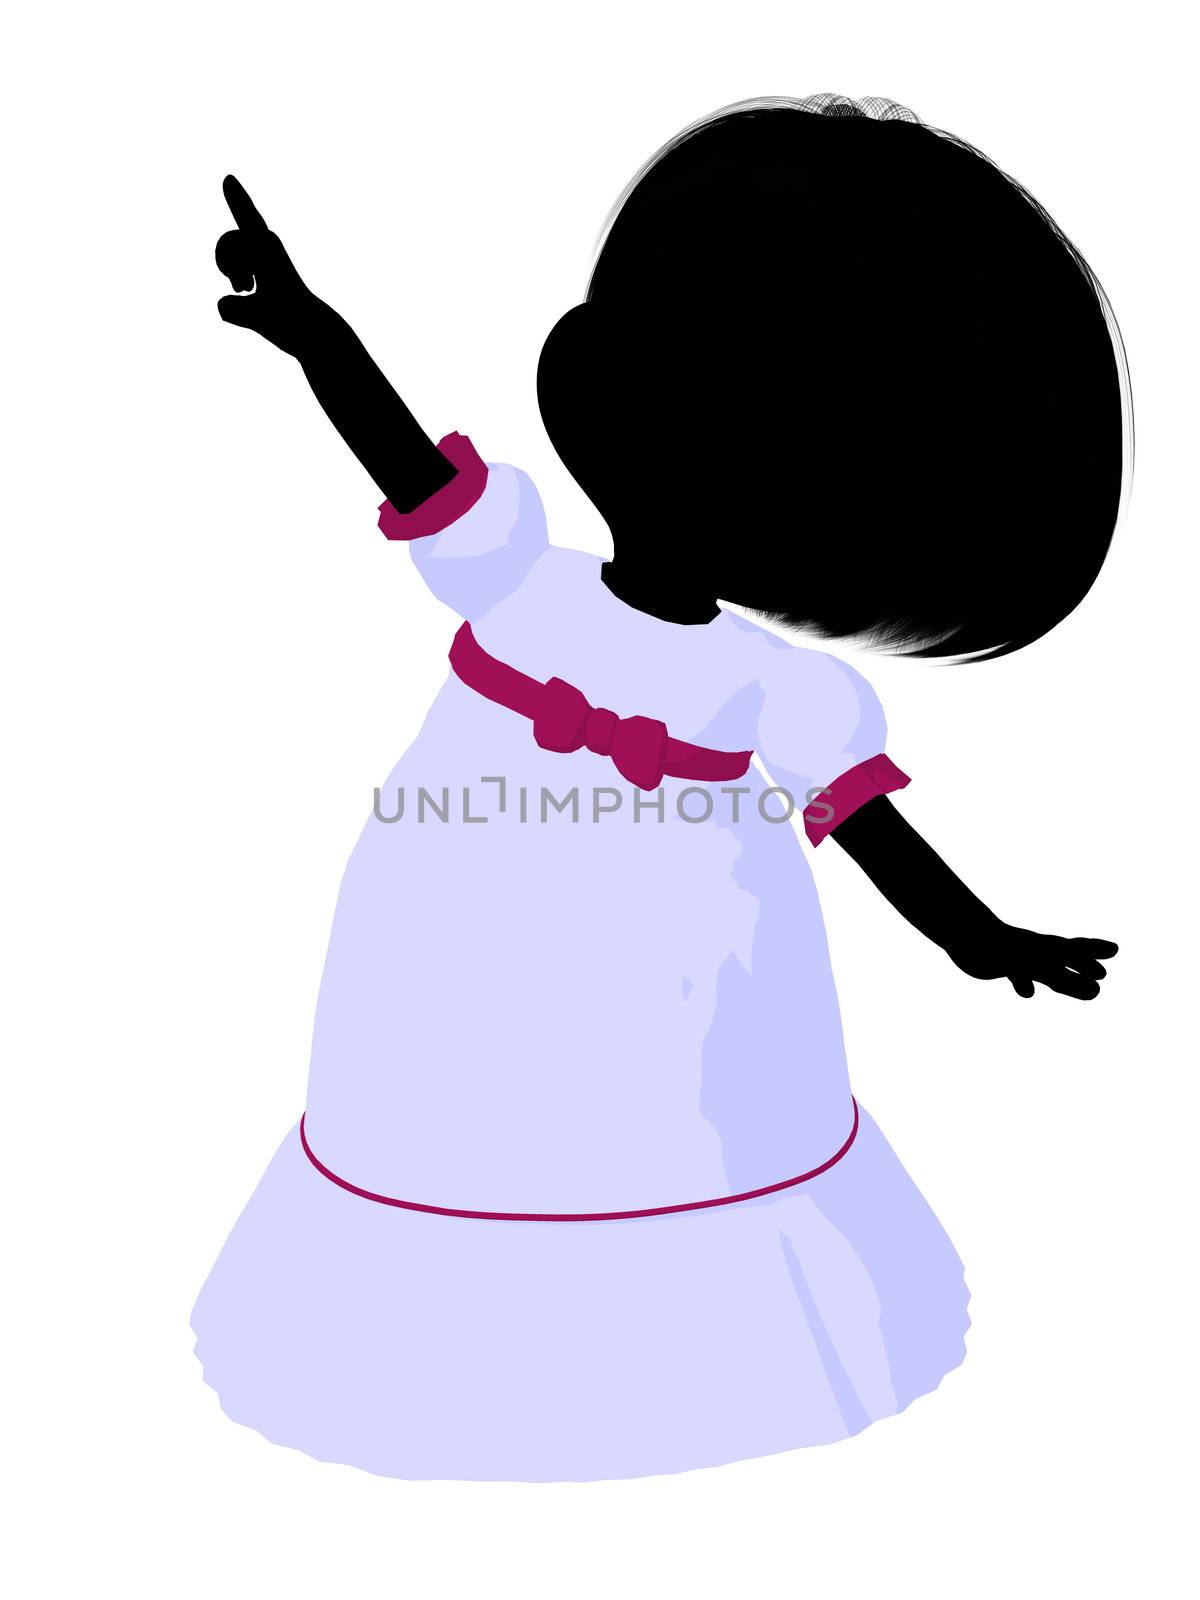 Little Romance Girl Illustration Silhouette by kathygold